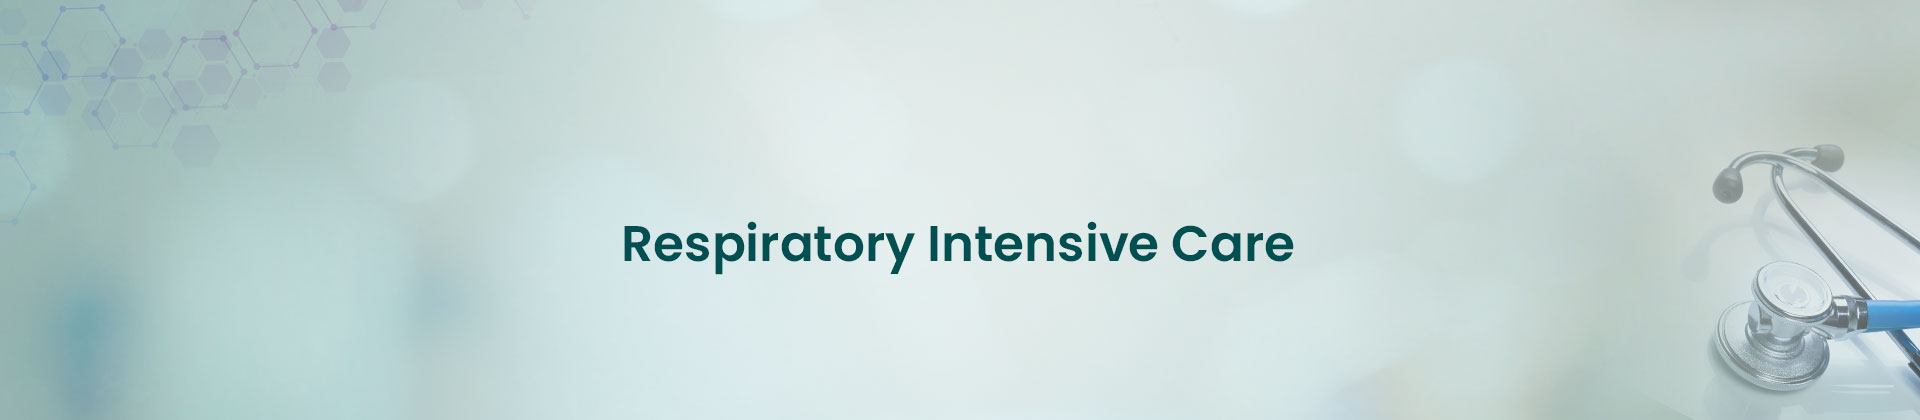 Respiratory Intensive Care